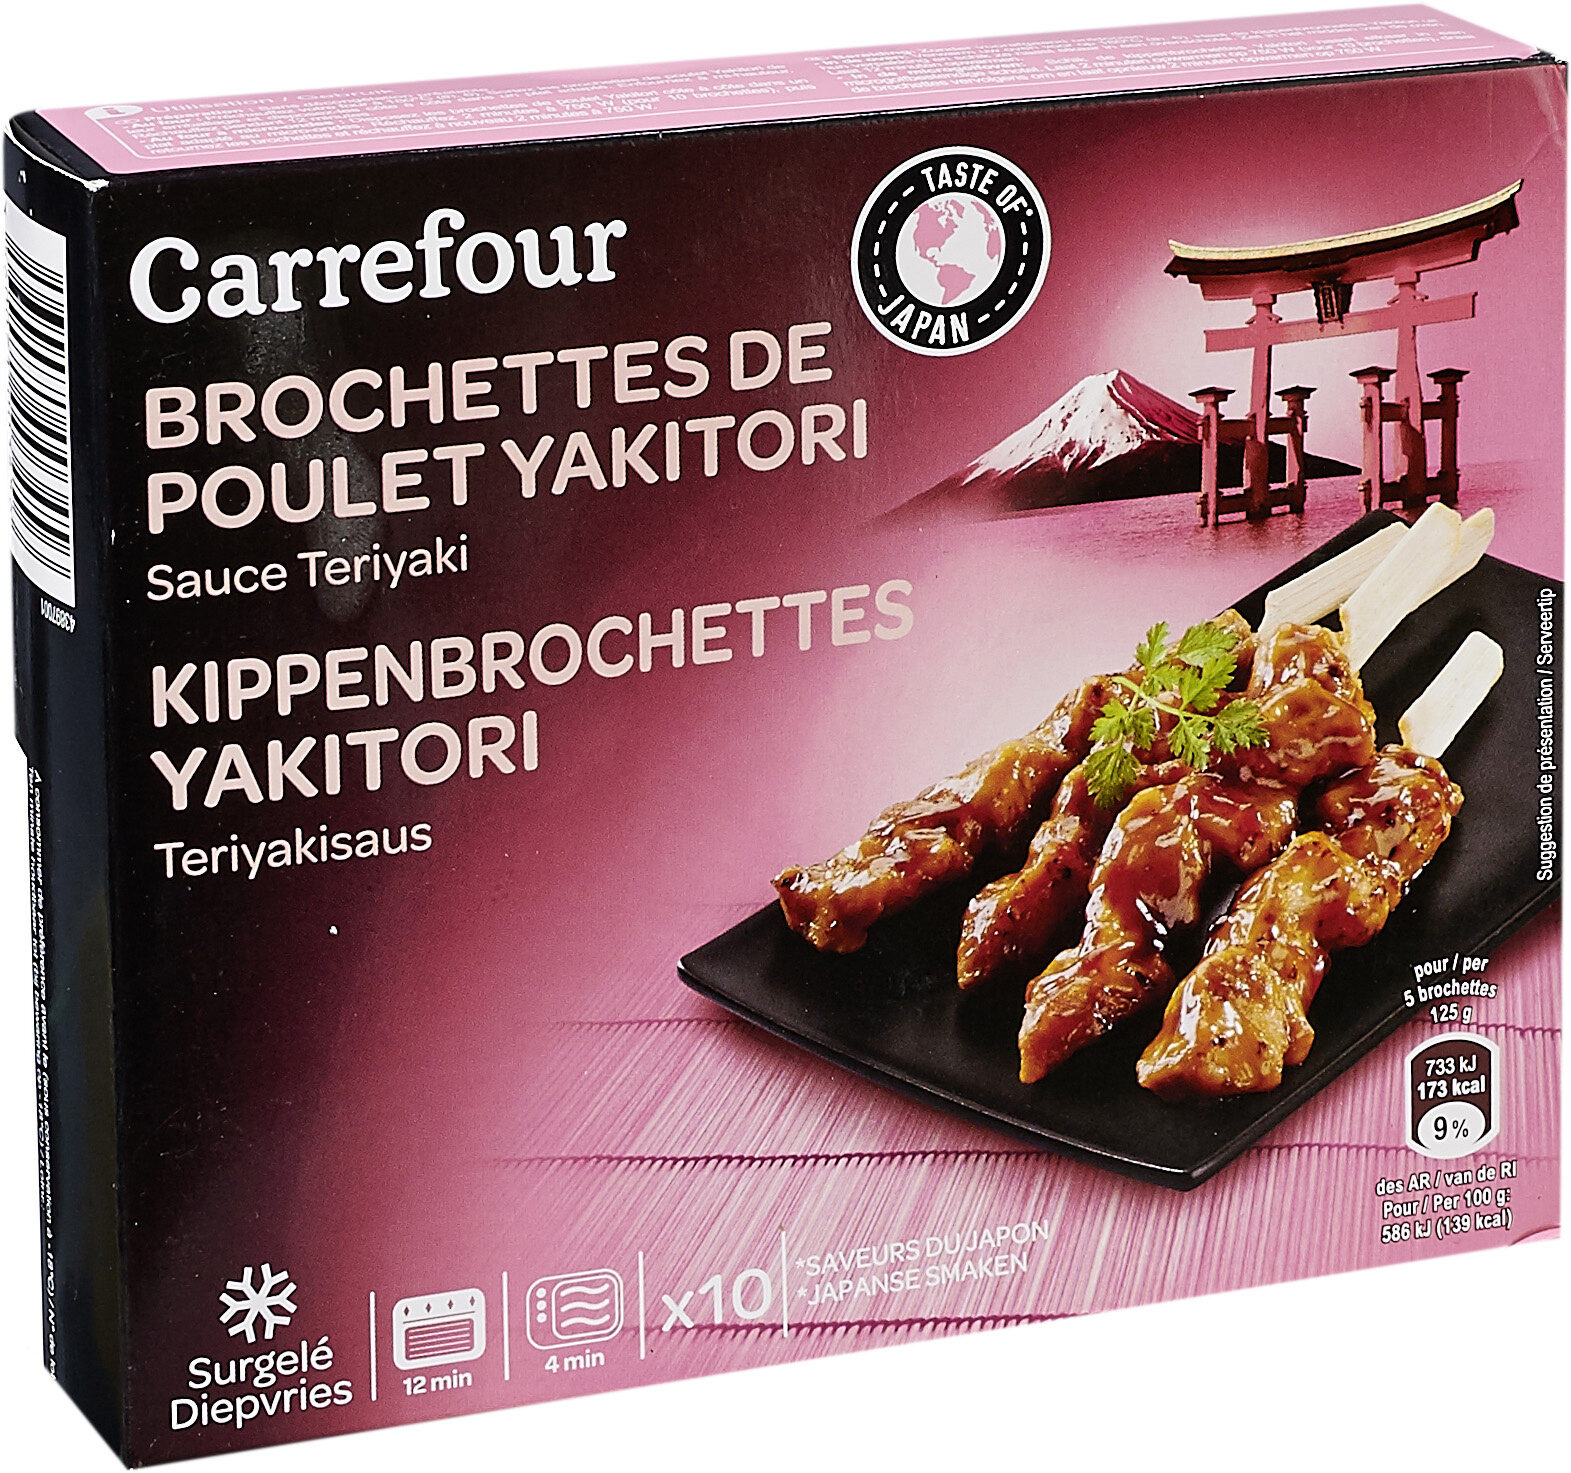 Brochettes de poulet Yakitori à la sauce Teriyaki - Producte - fr